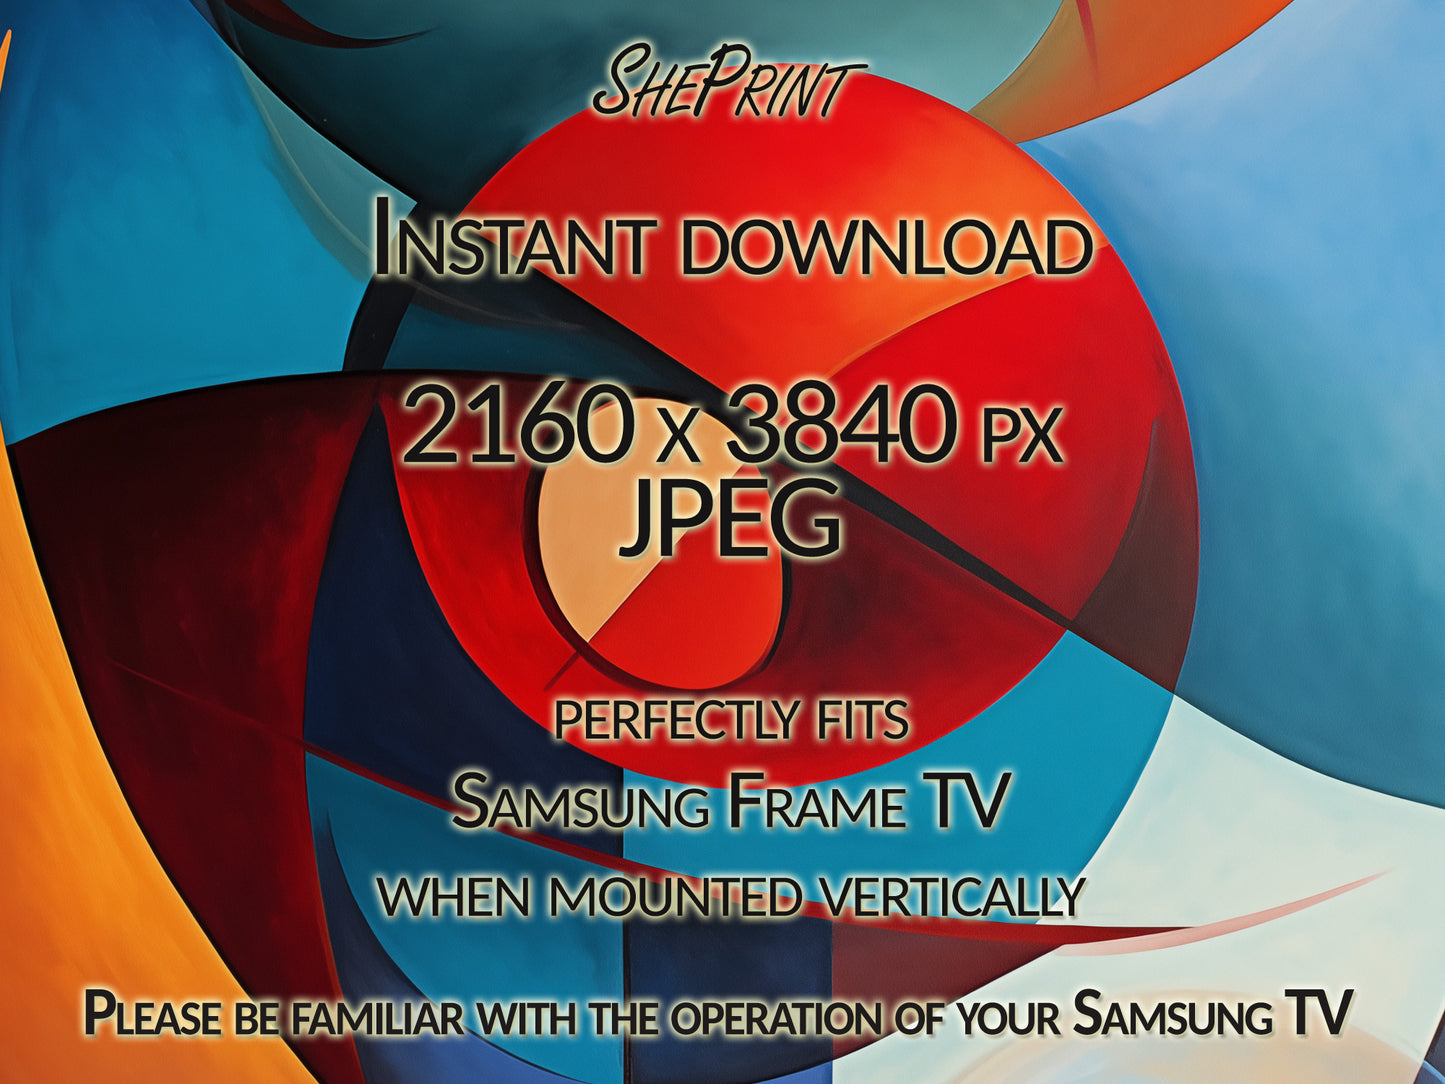 Vertical & Horizontal Frame TV Art, Curvy Shapes Abstract Art, Vibrant Colors, Oil Painting, Digital TV Art, JPEG Images, Instant Download